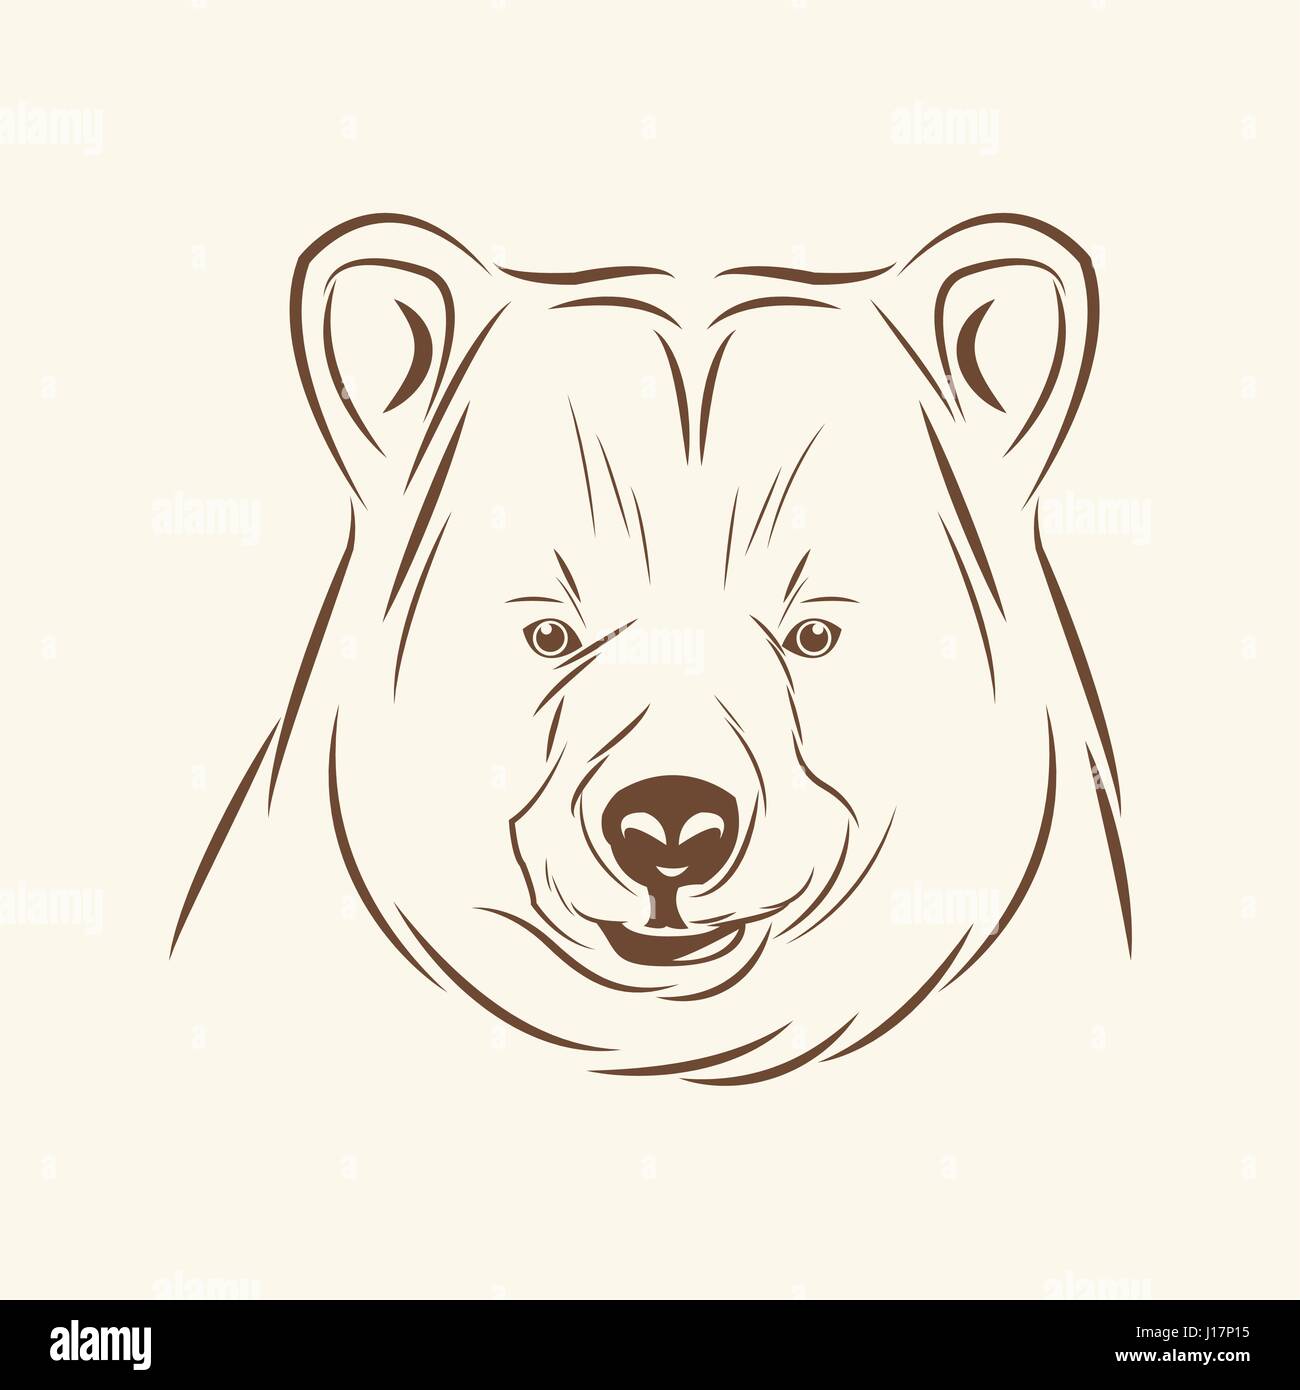 Native art spirit bear hi-res stock photography and images - Alamy